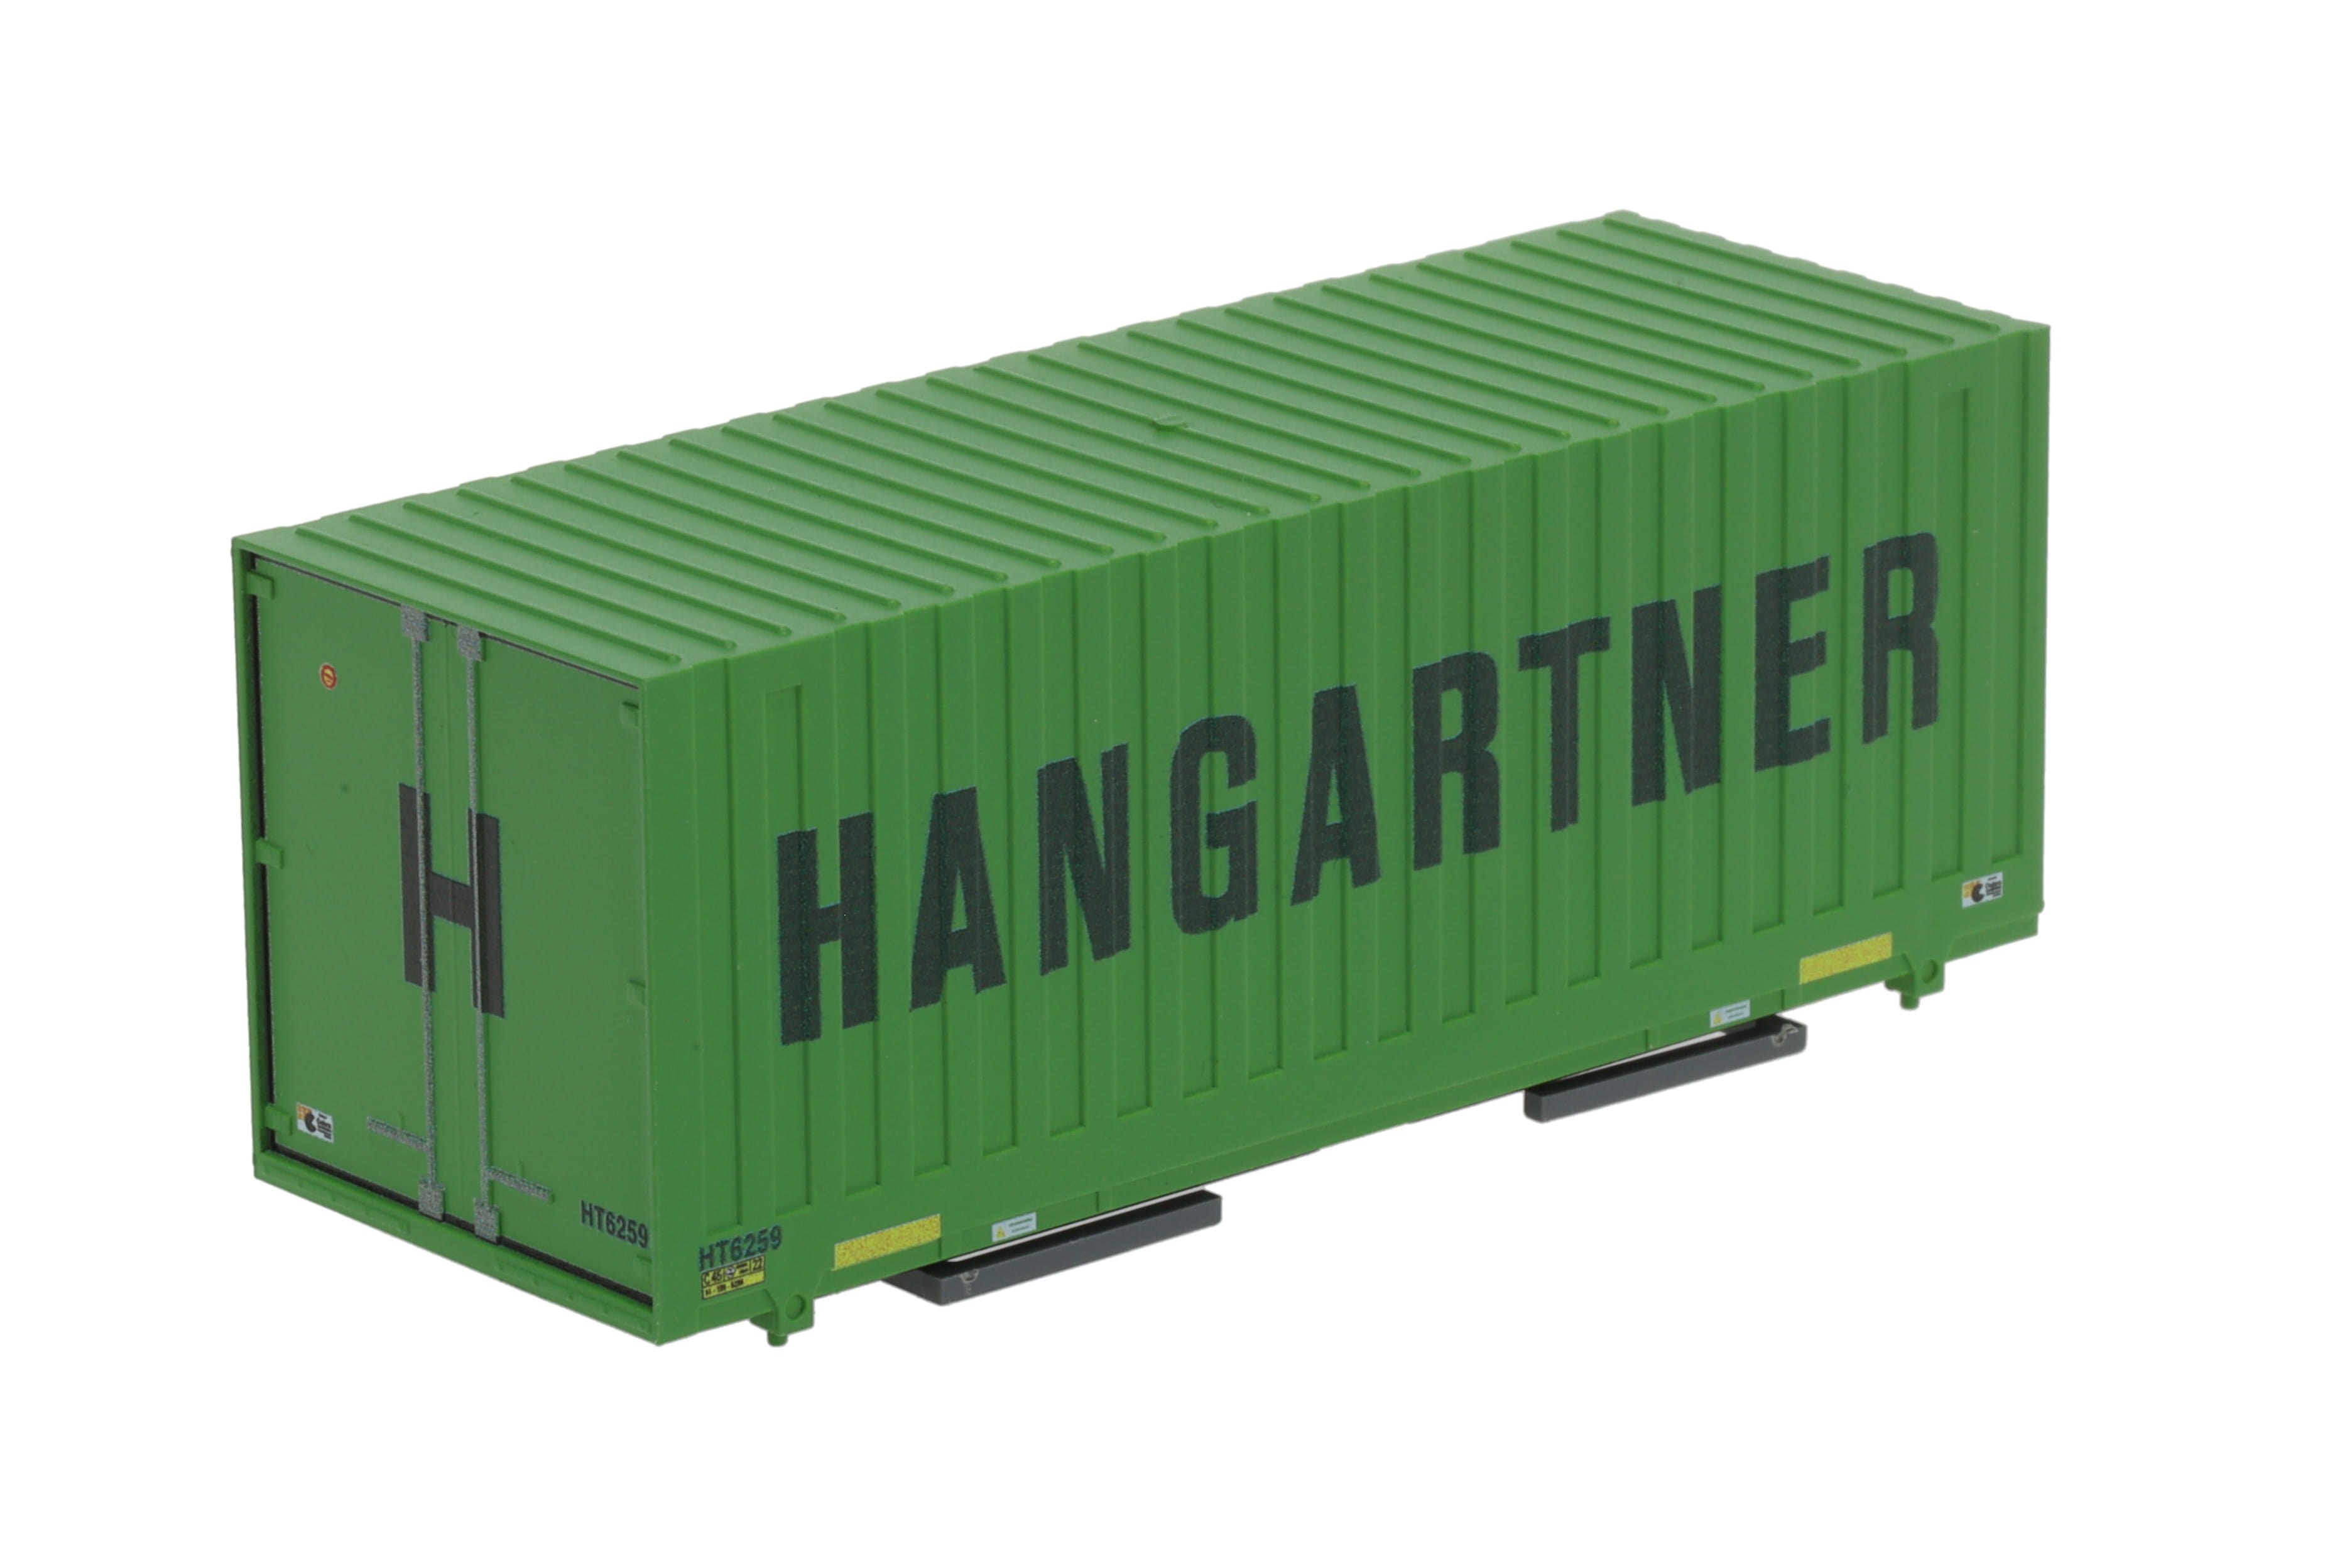 1:87 Container WB-C715 HANGAR Wechselbehälter WB-C 715 Cobra Spu-Wa Box, Aufschrift: HANGARTNER, Behälter-Nr: HT 6259